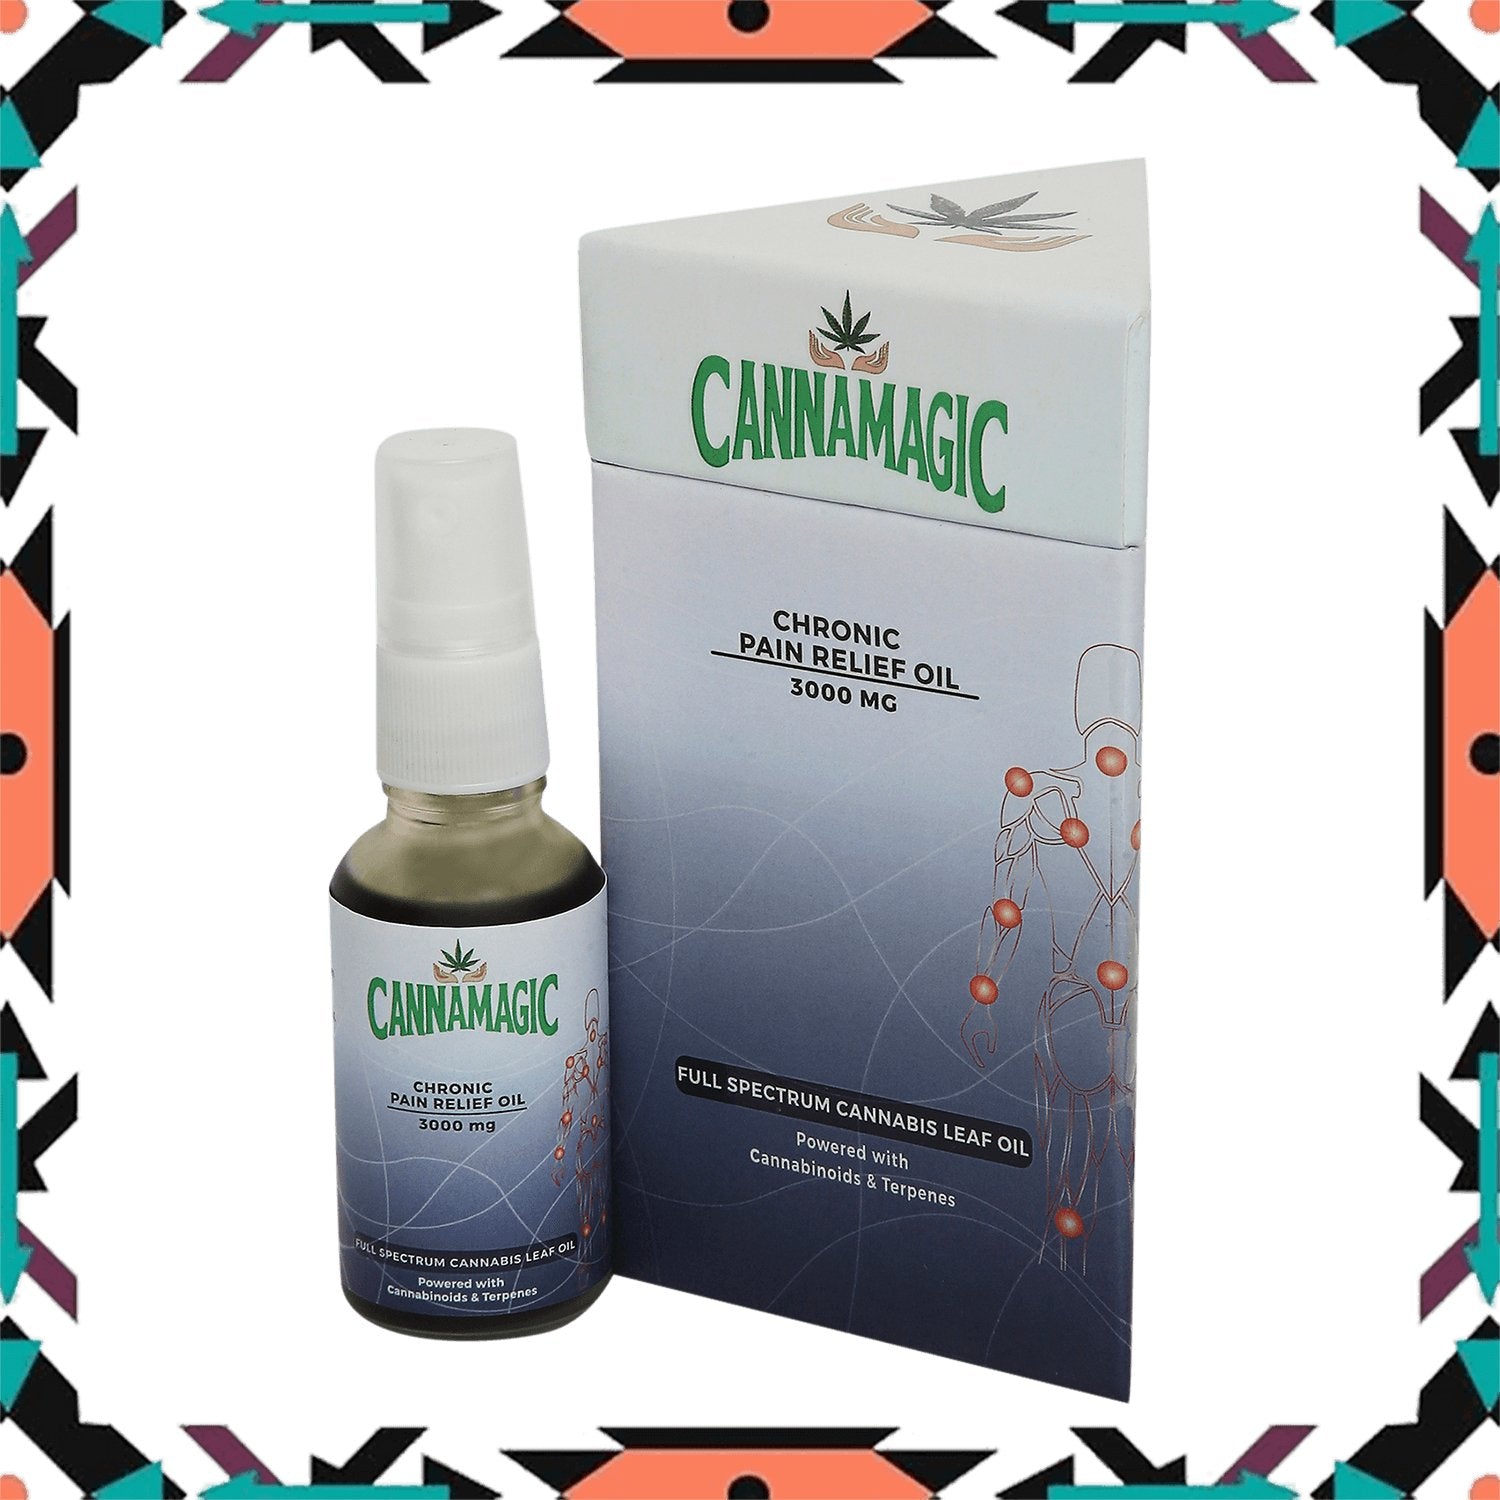 Cannamagic Chronic Pain Relief Oil 3000mg - Full Spectrum Cannabis Leaf Oil - CBD Store India